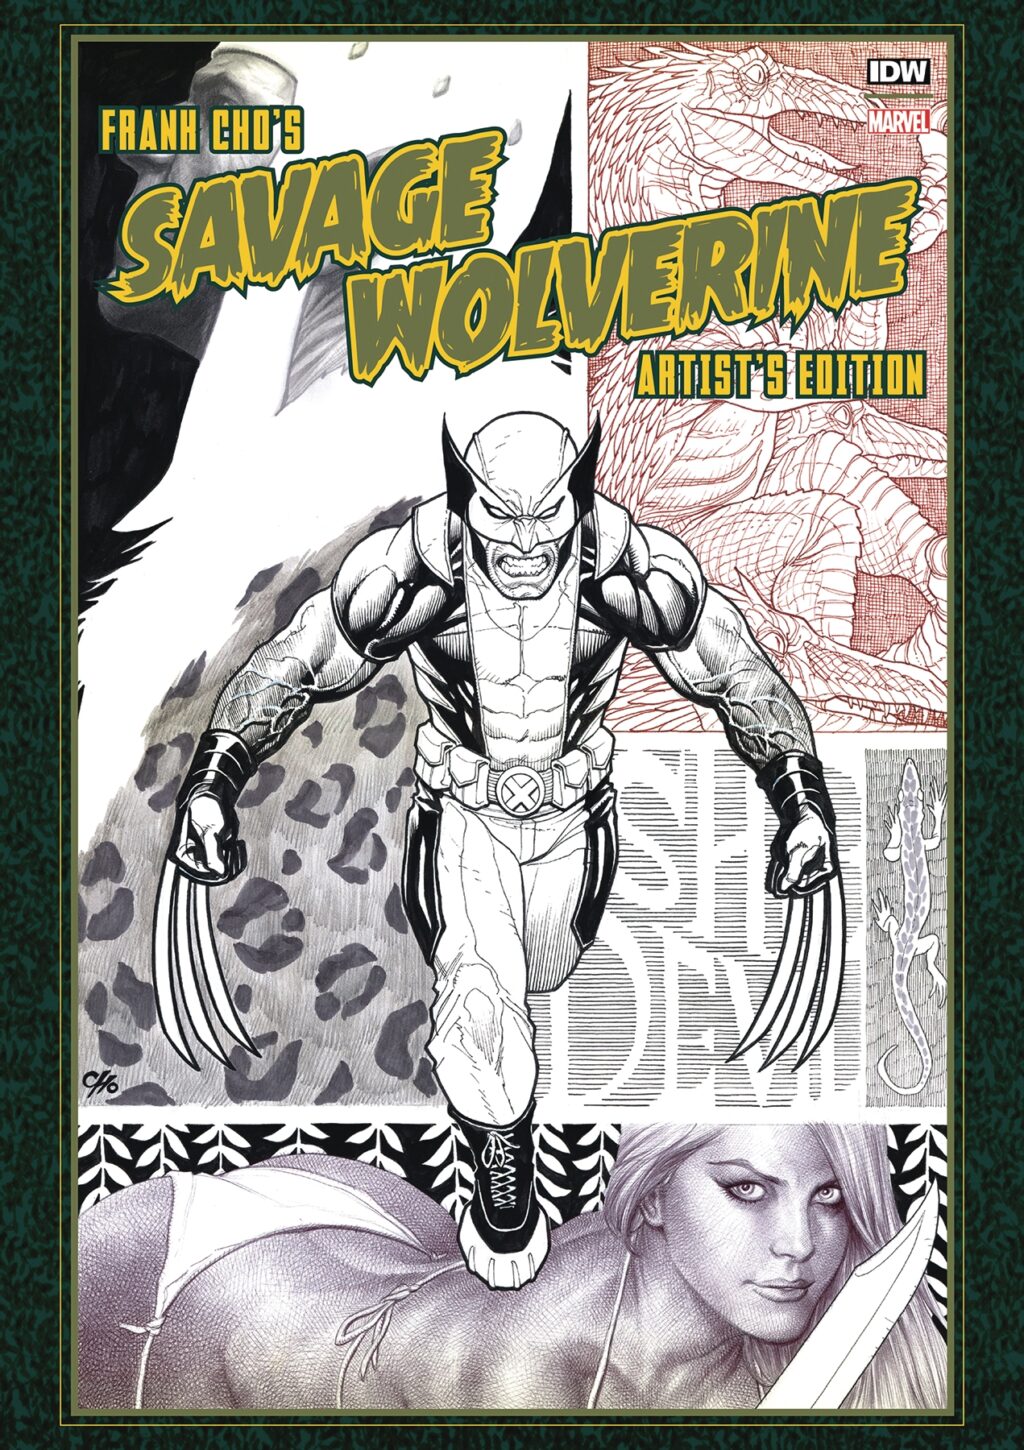 Frank Cho's Savage Wolverine Artist's Edition cover prelim